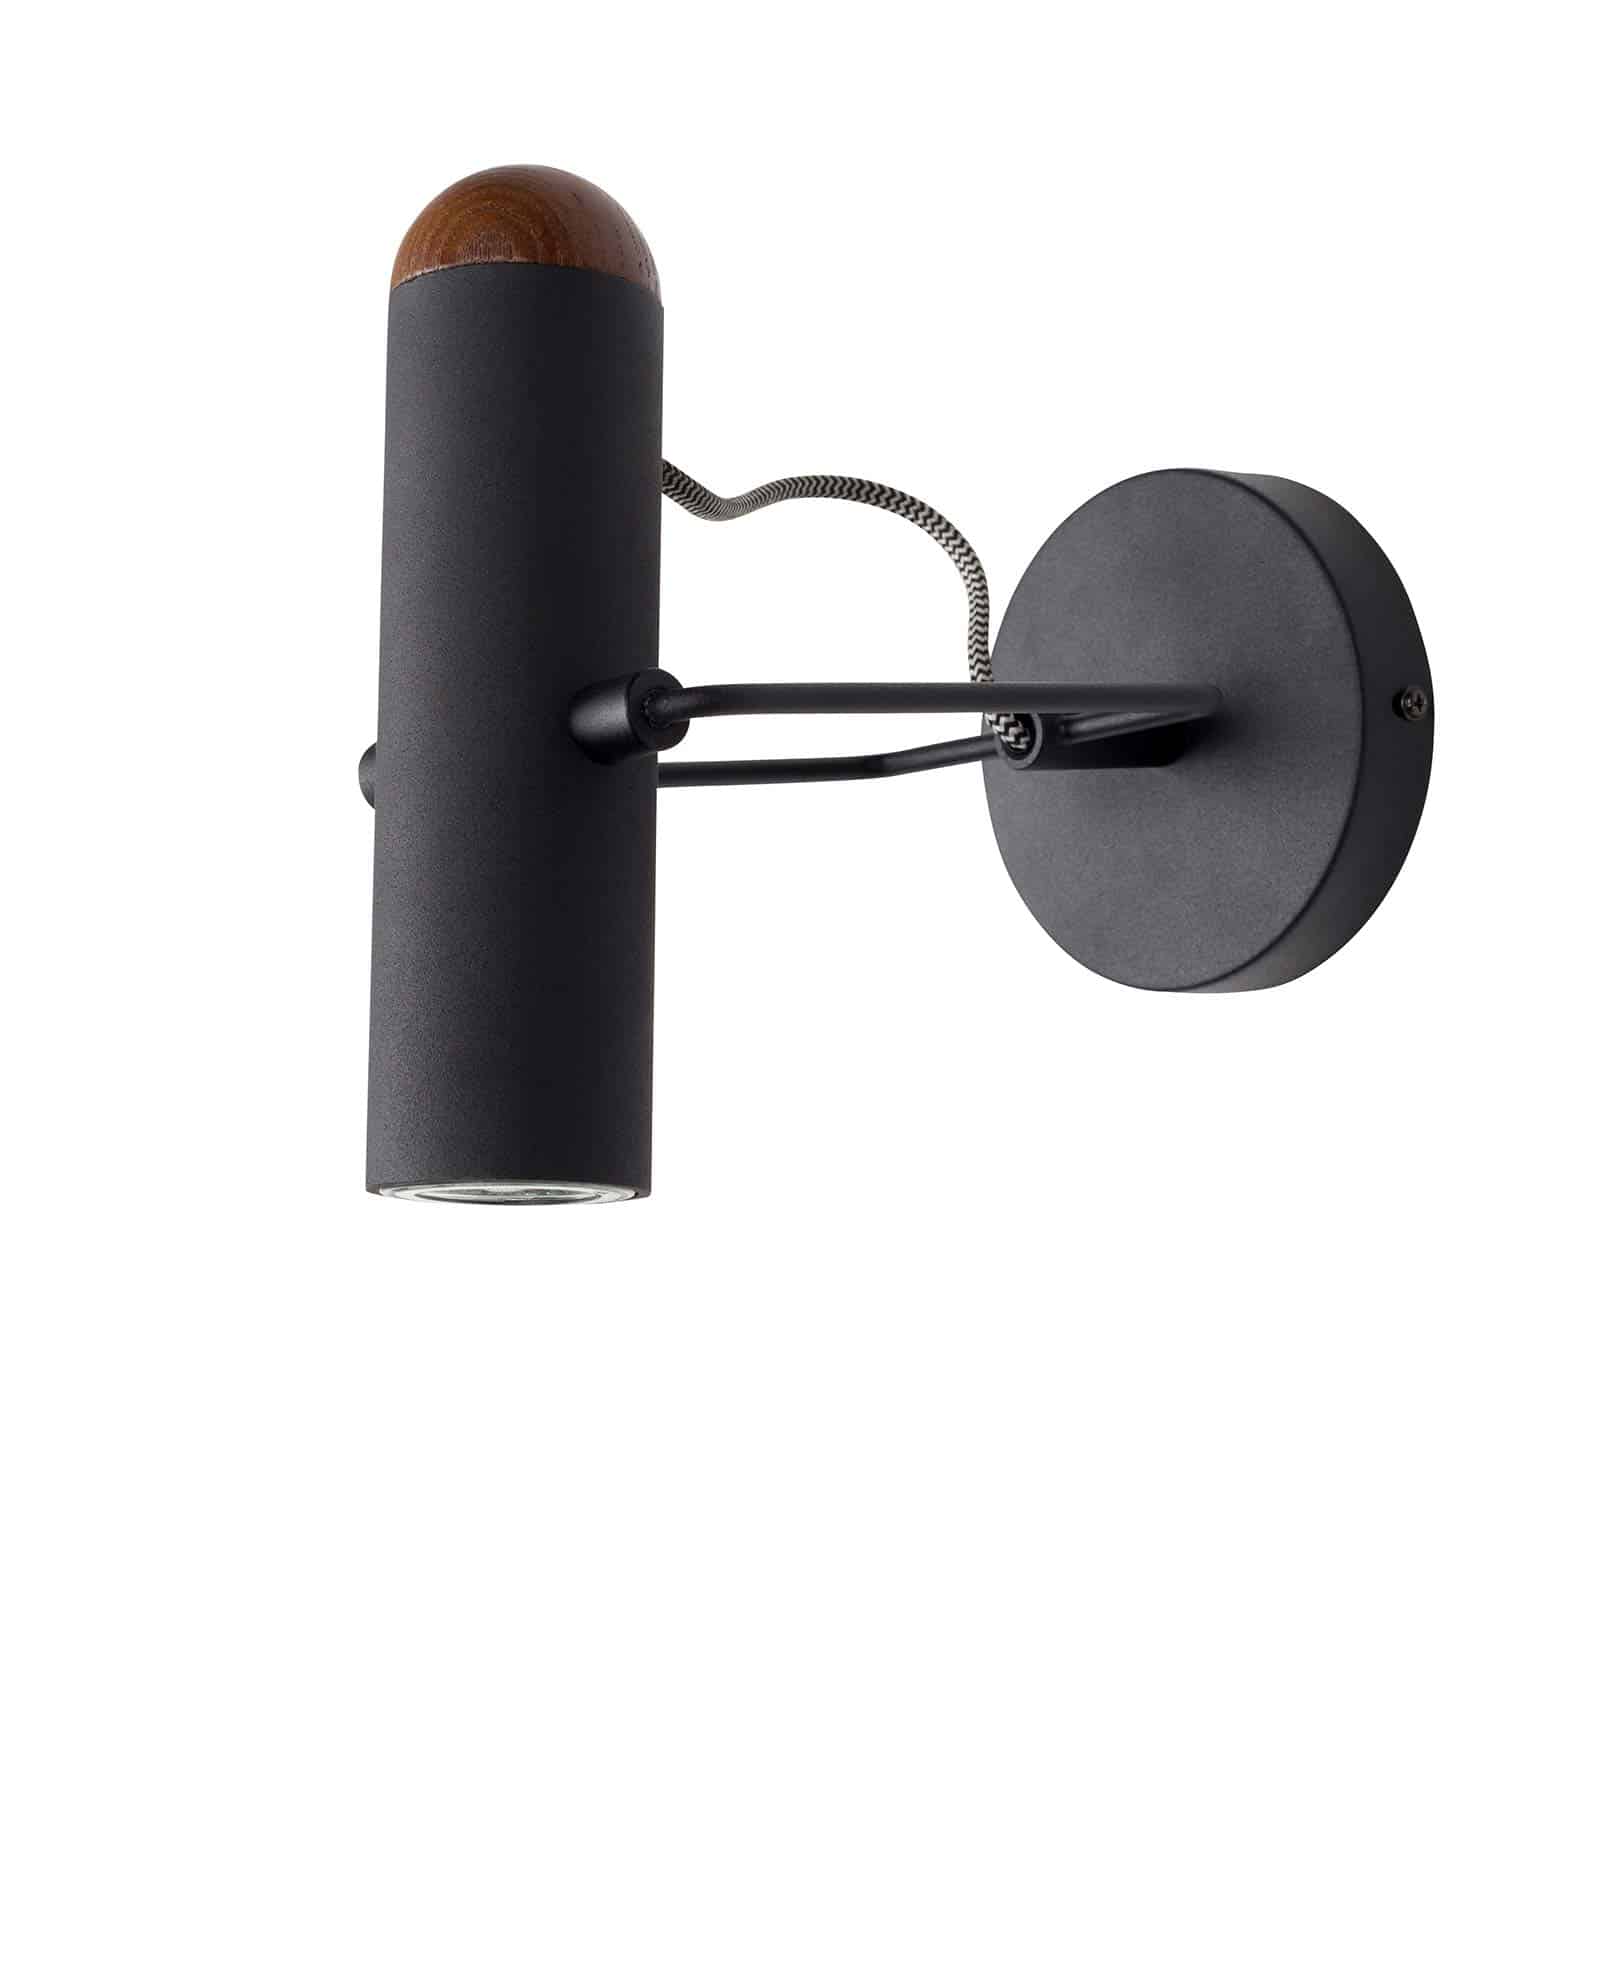 Schat hartstochtelijk Tulpen Marlon wandlamp by Zuiver - Designshopp